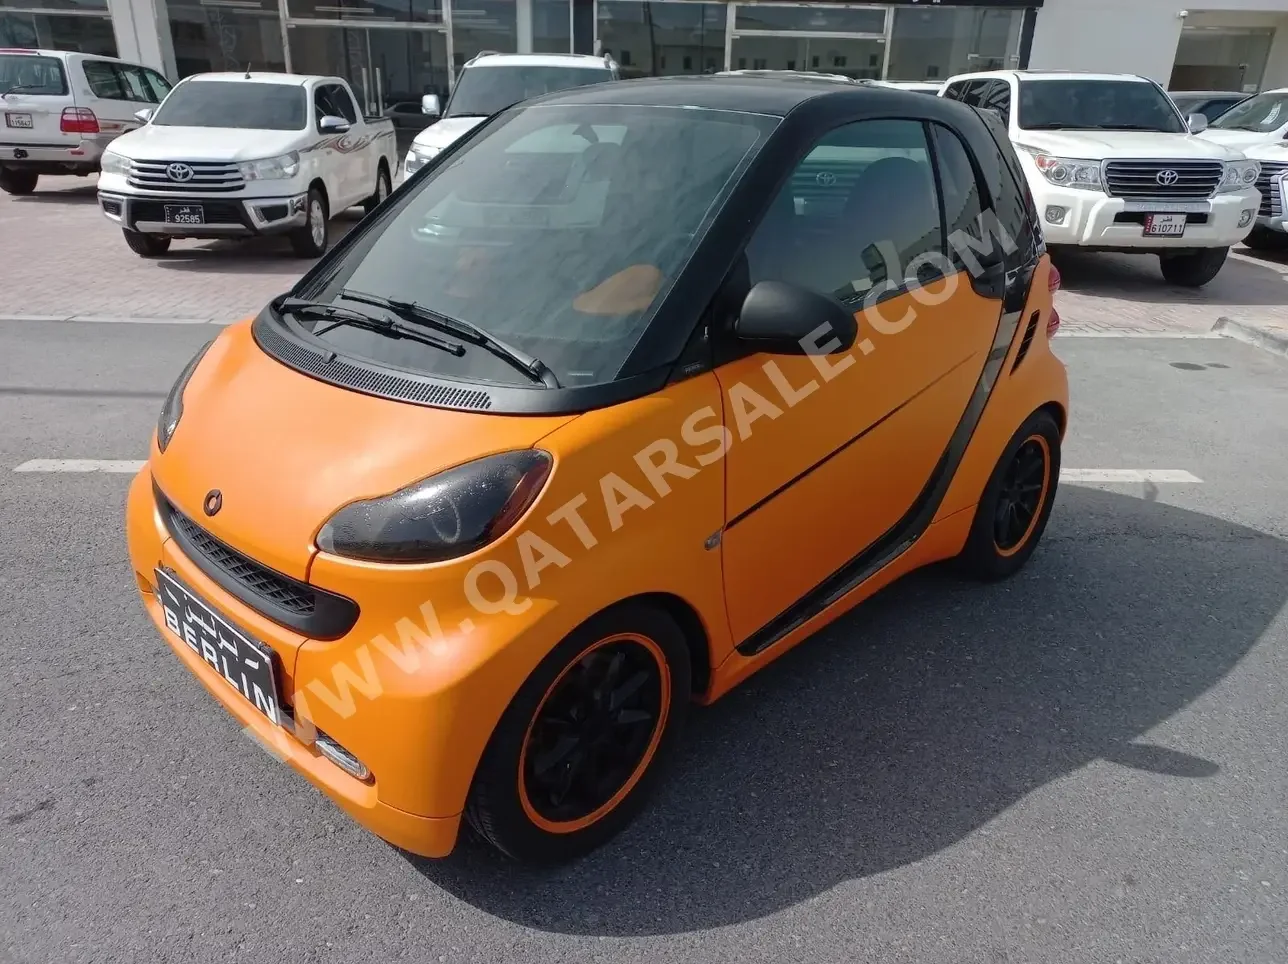 Smart  MHD  2015  Automatic  52,000 Km  4 Cylinder  Front Wheel Drive (FWD)  Sedan  Orange